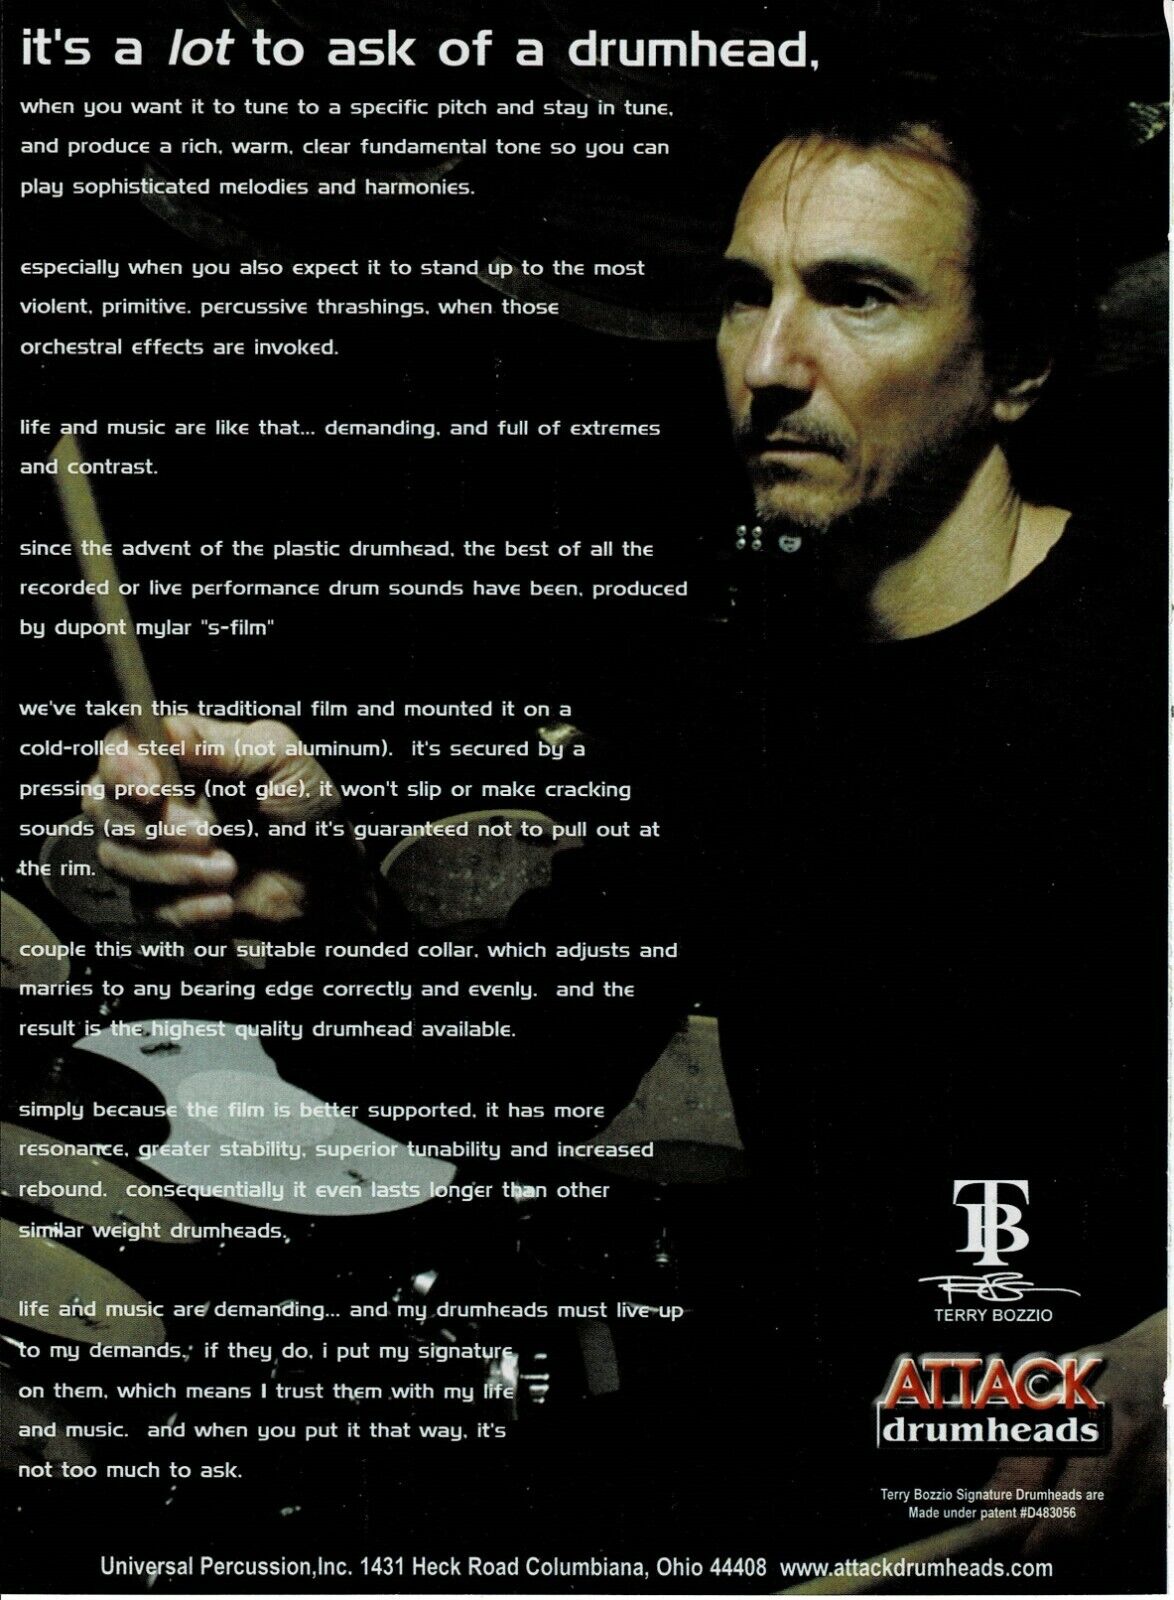 ATTACK Drumheads - Terry Bozzio - 2007 Print Advertisement